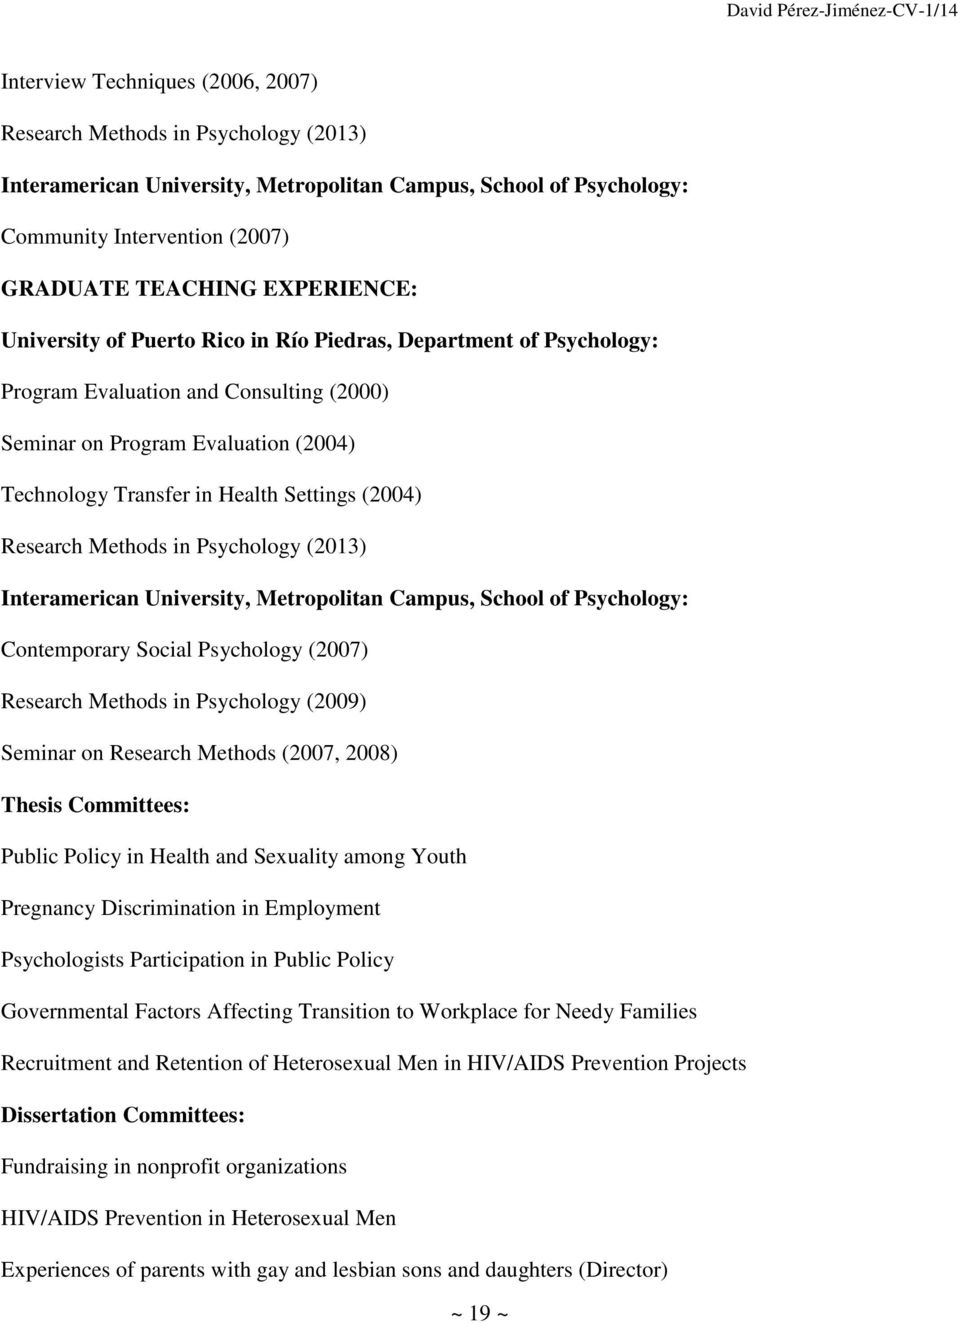 (2004) Research Methods in Psychology (2013) Interamerican University, Metropolitan Campus, School of Psychology: Contemporary Social Psychology (2007) Research Methods in Psychology (2009) Seminar